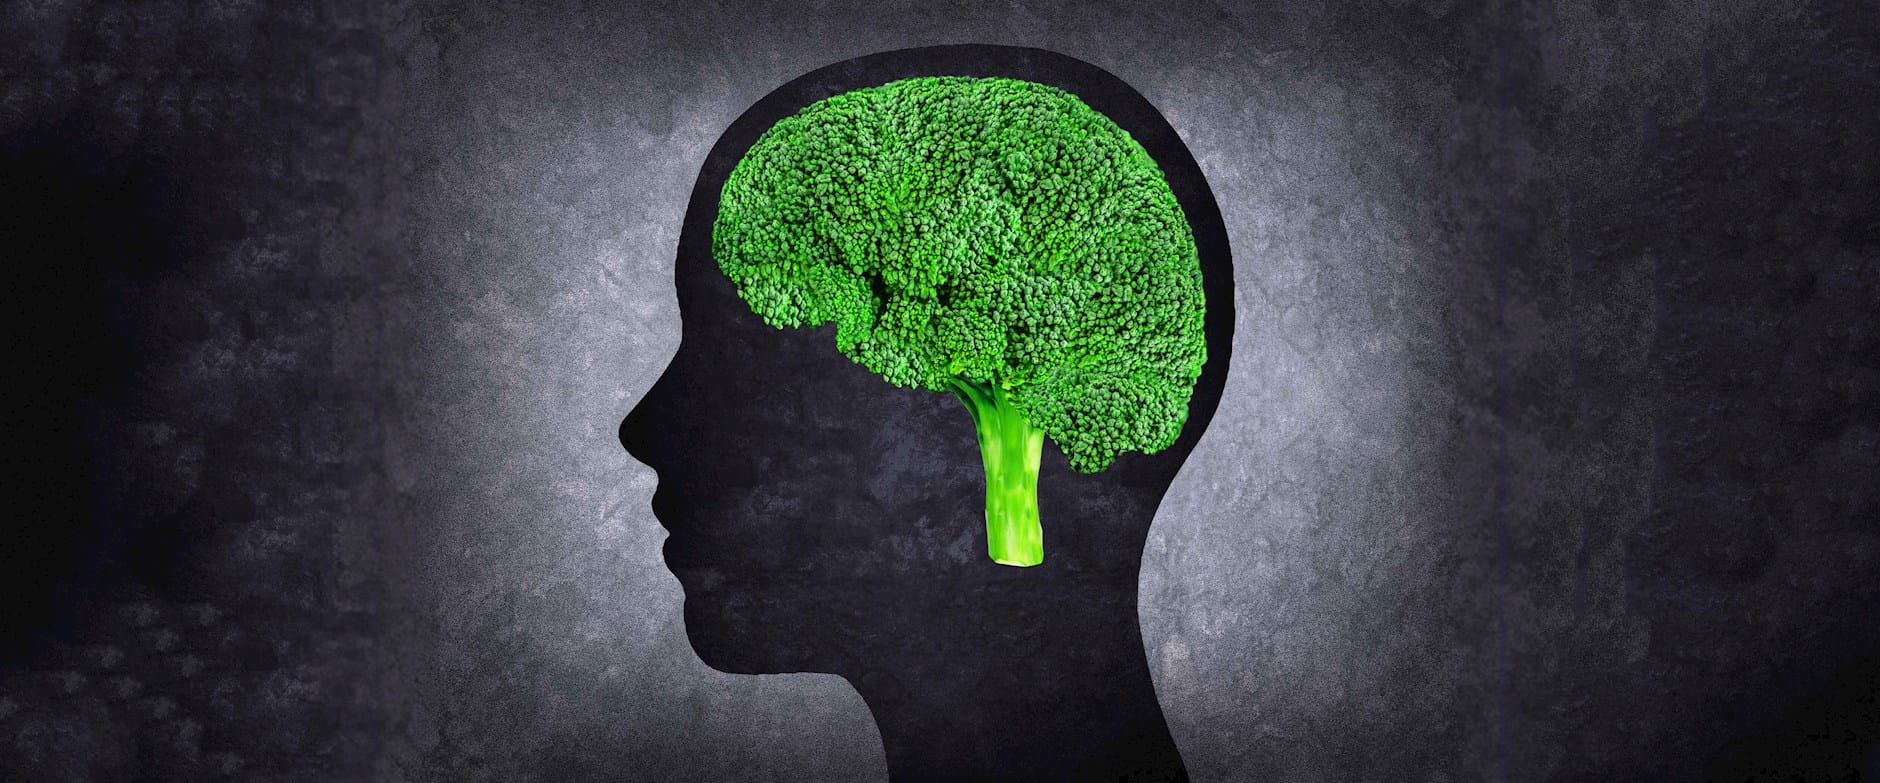 Head with broccoli for brain